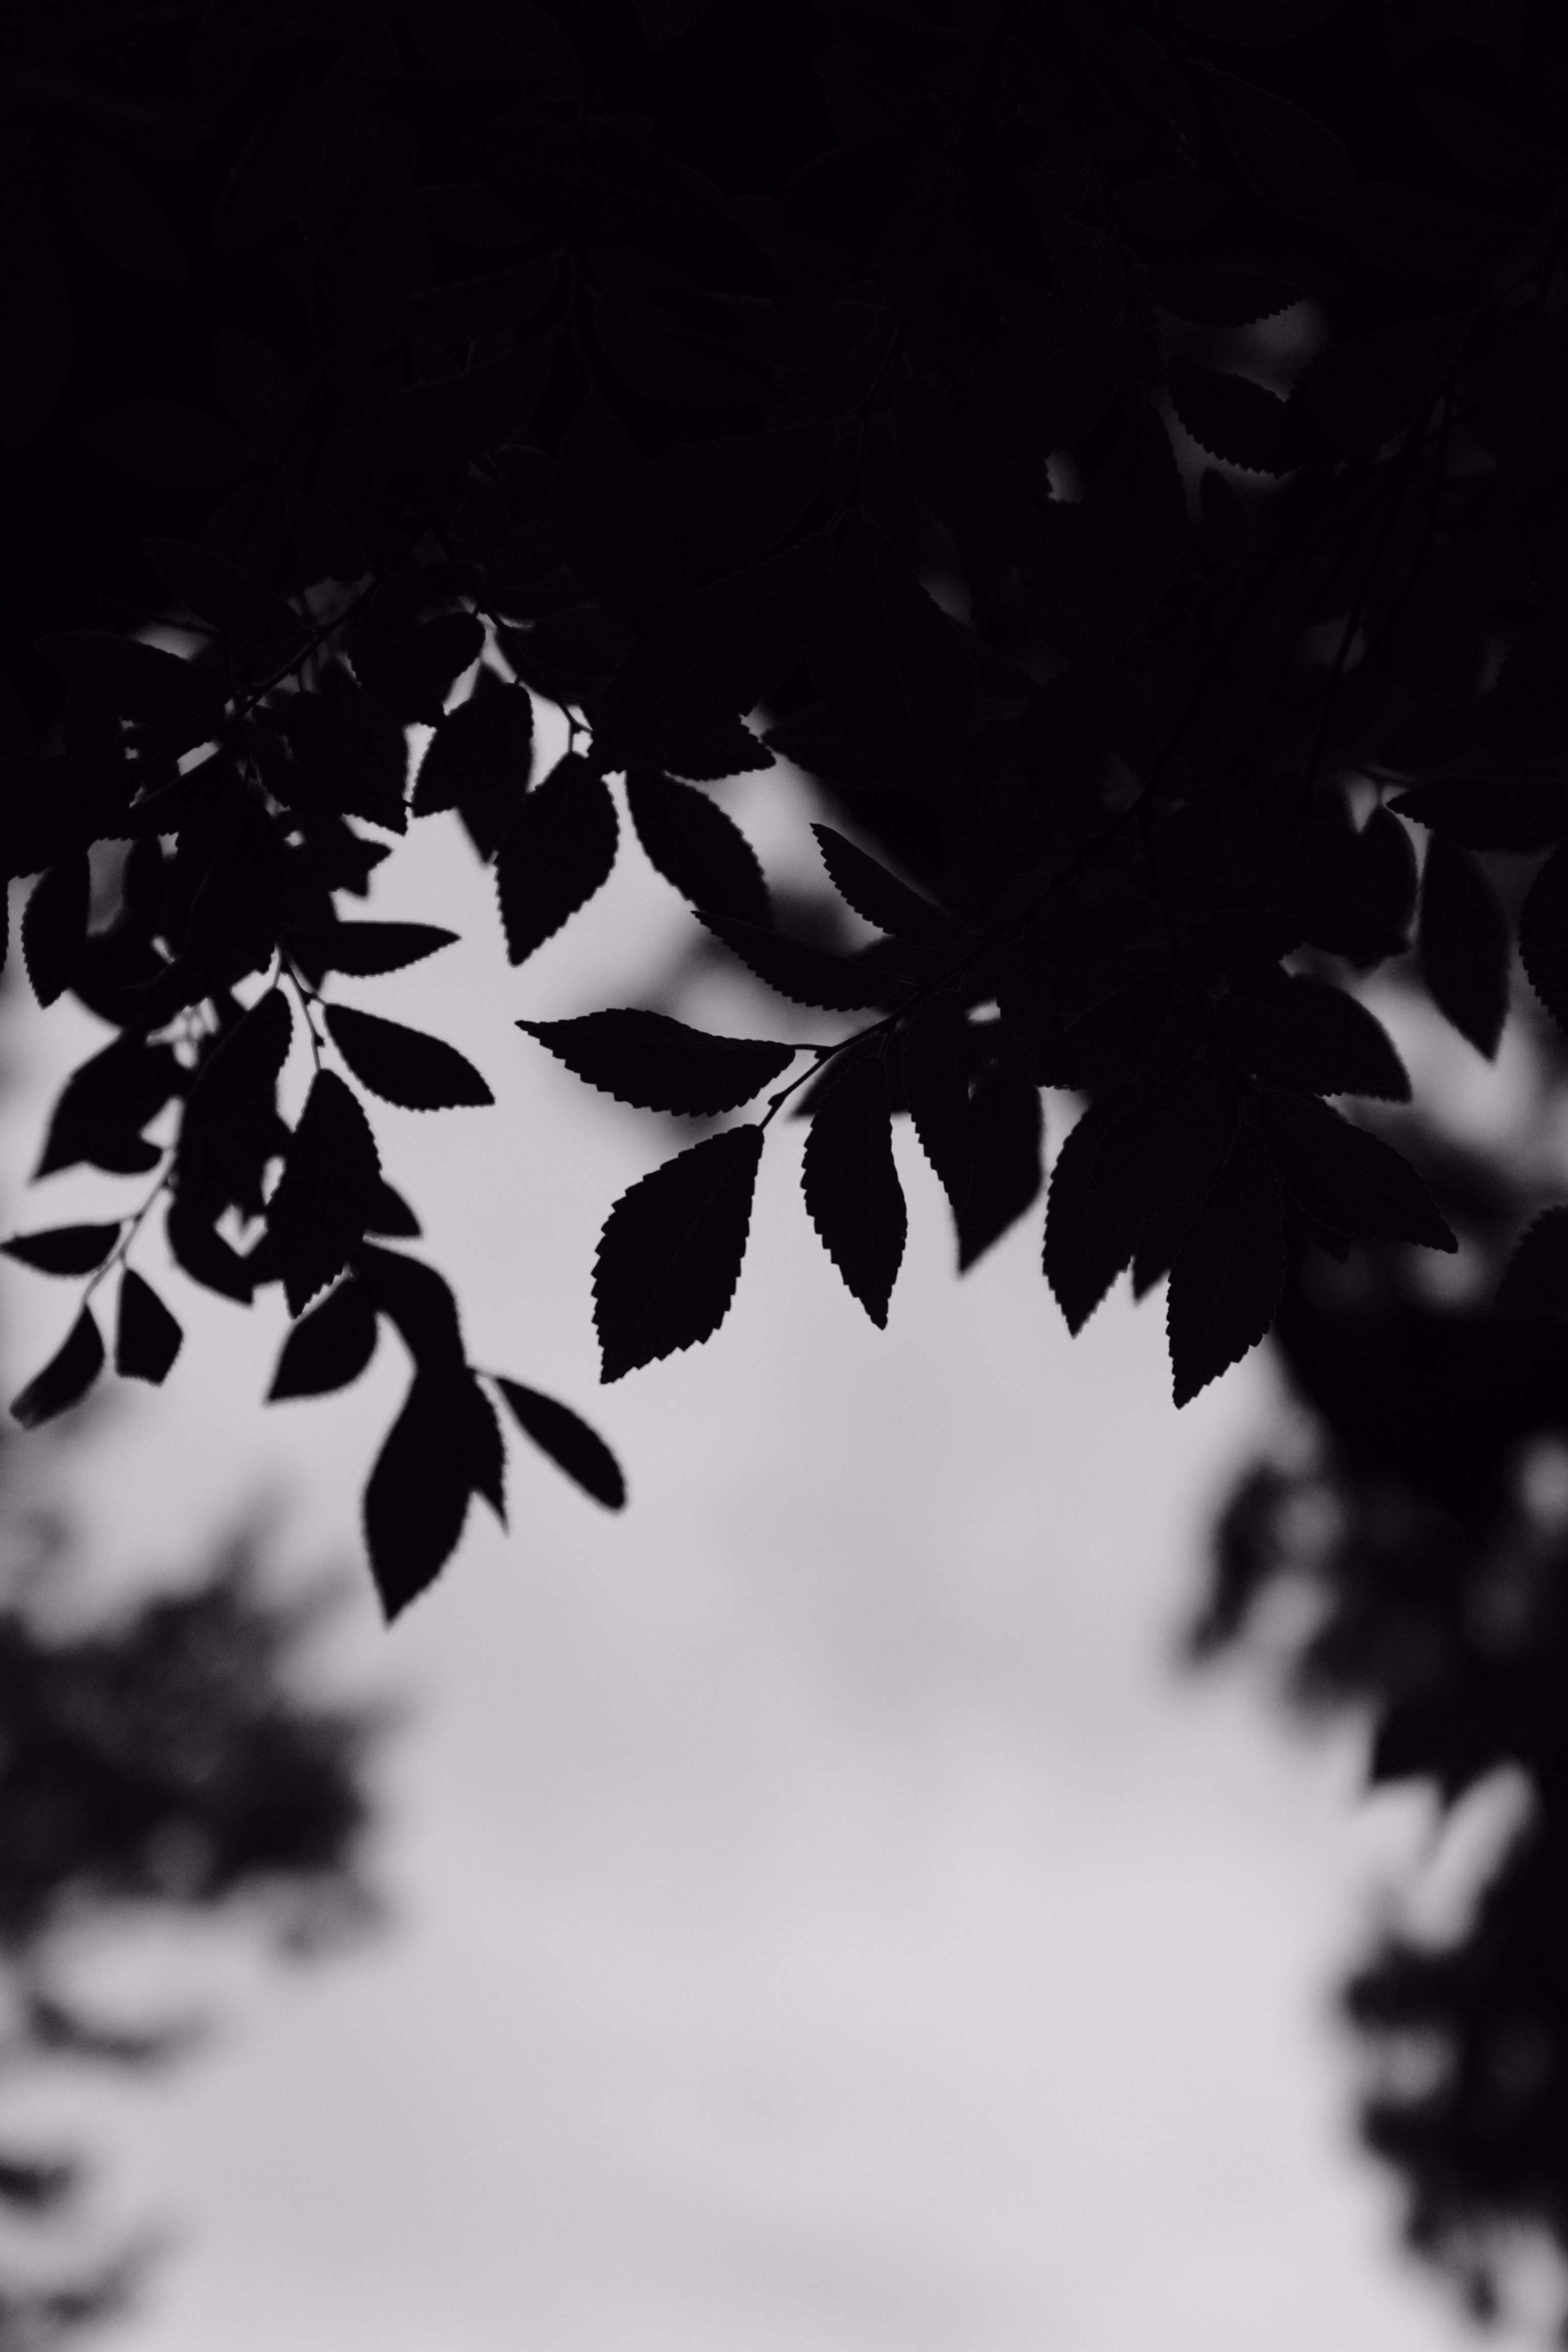 outlines, leaves, black, branches, bw, chb 8K